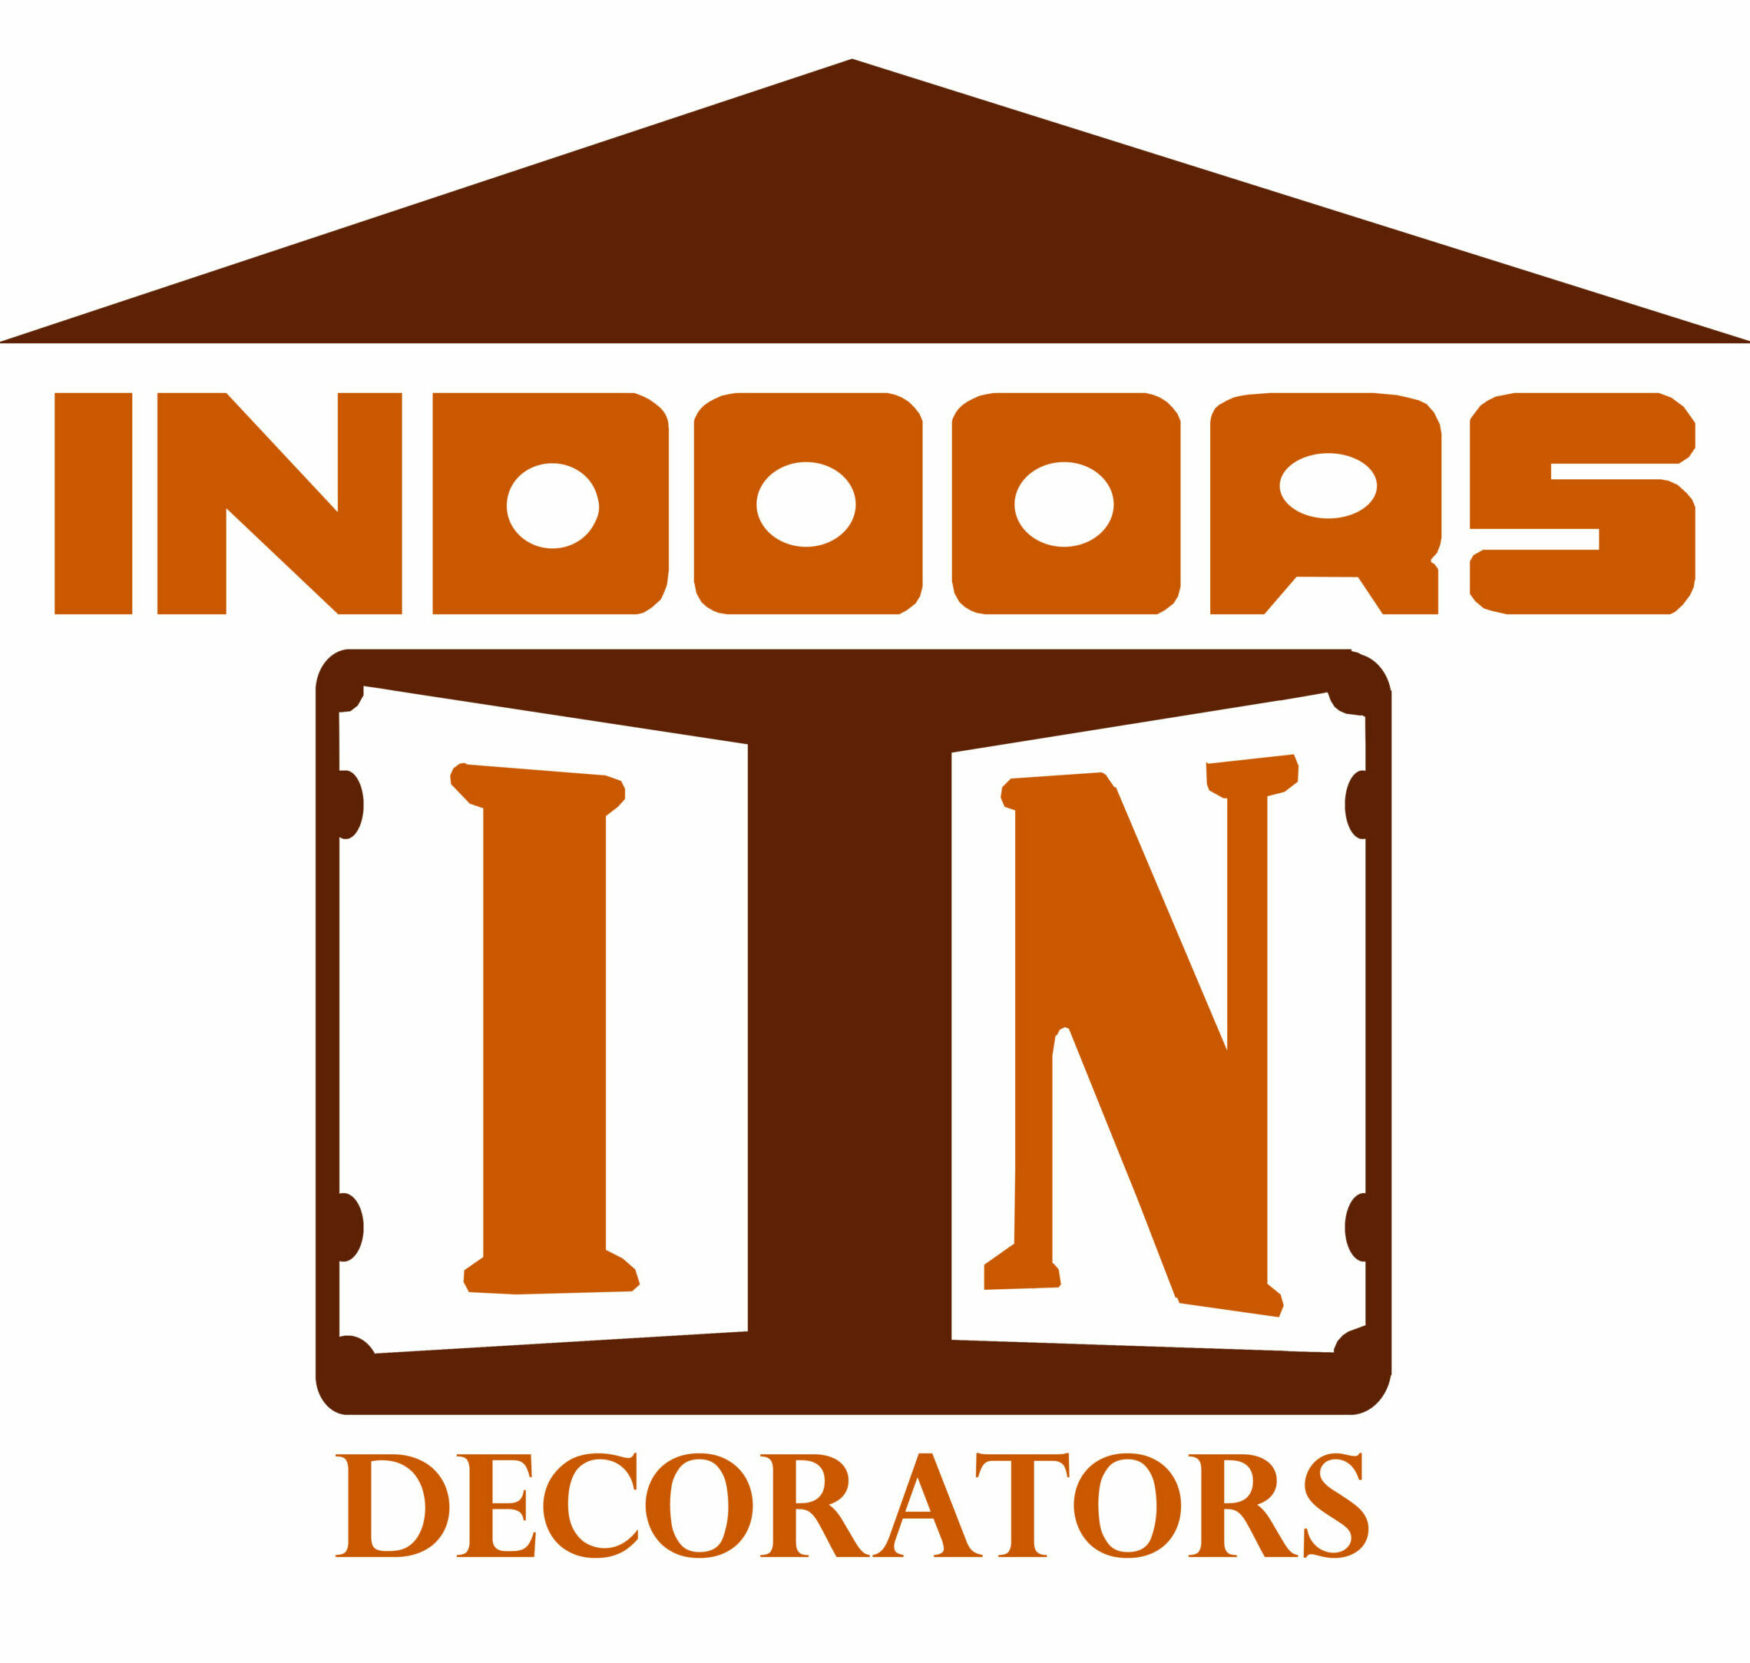 Indoors Decorators: Premium high quality furniture and home decor